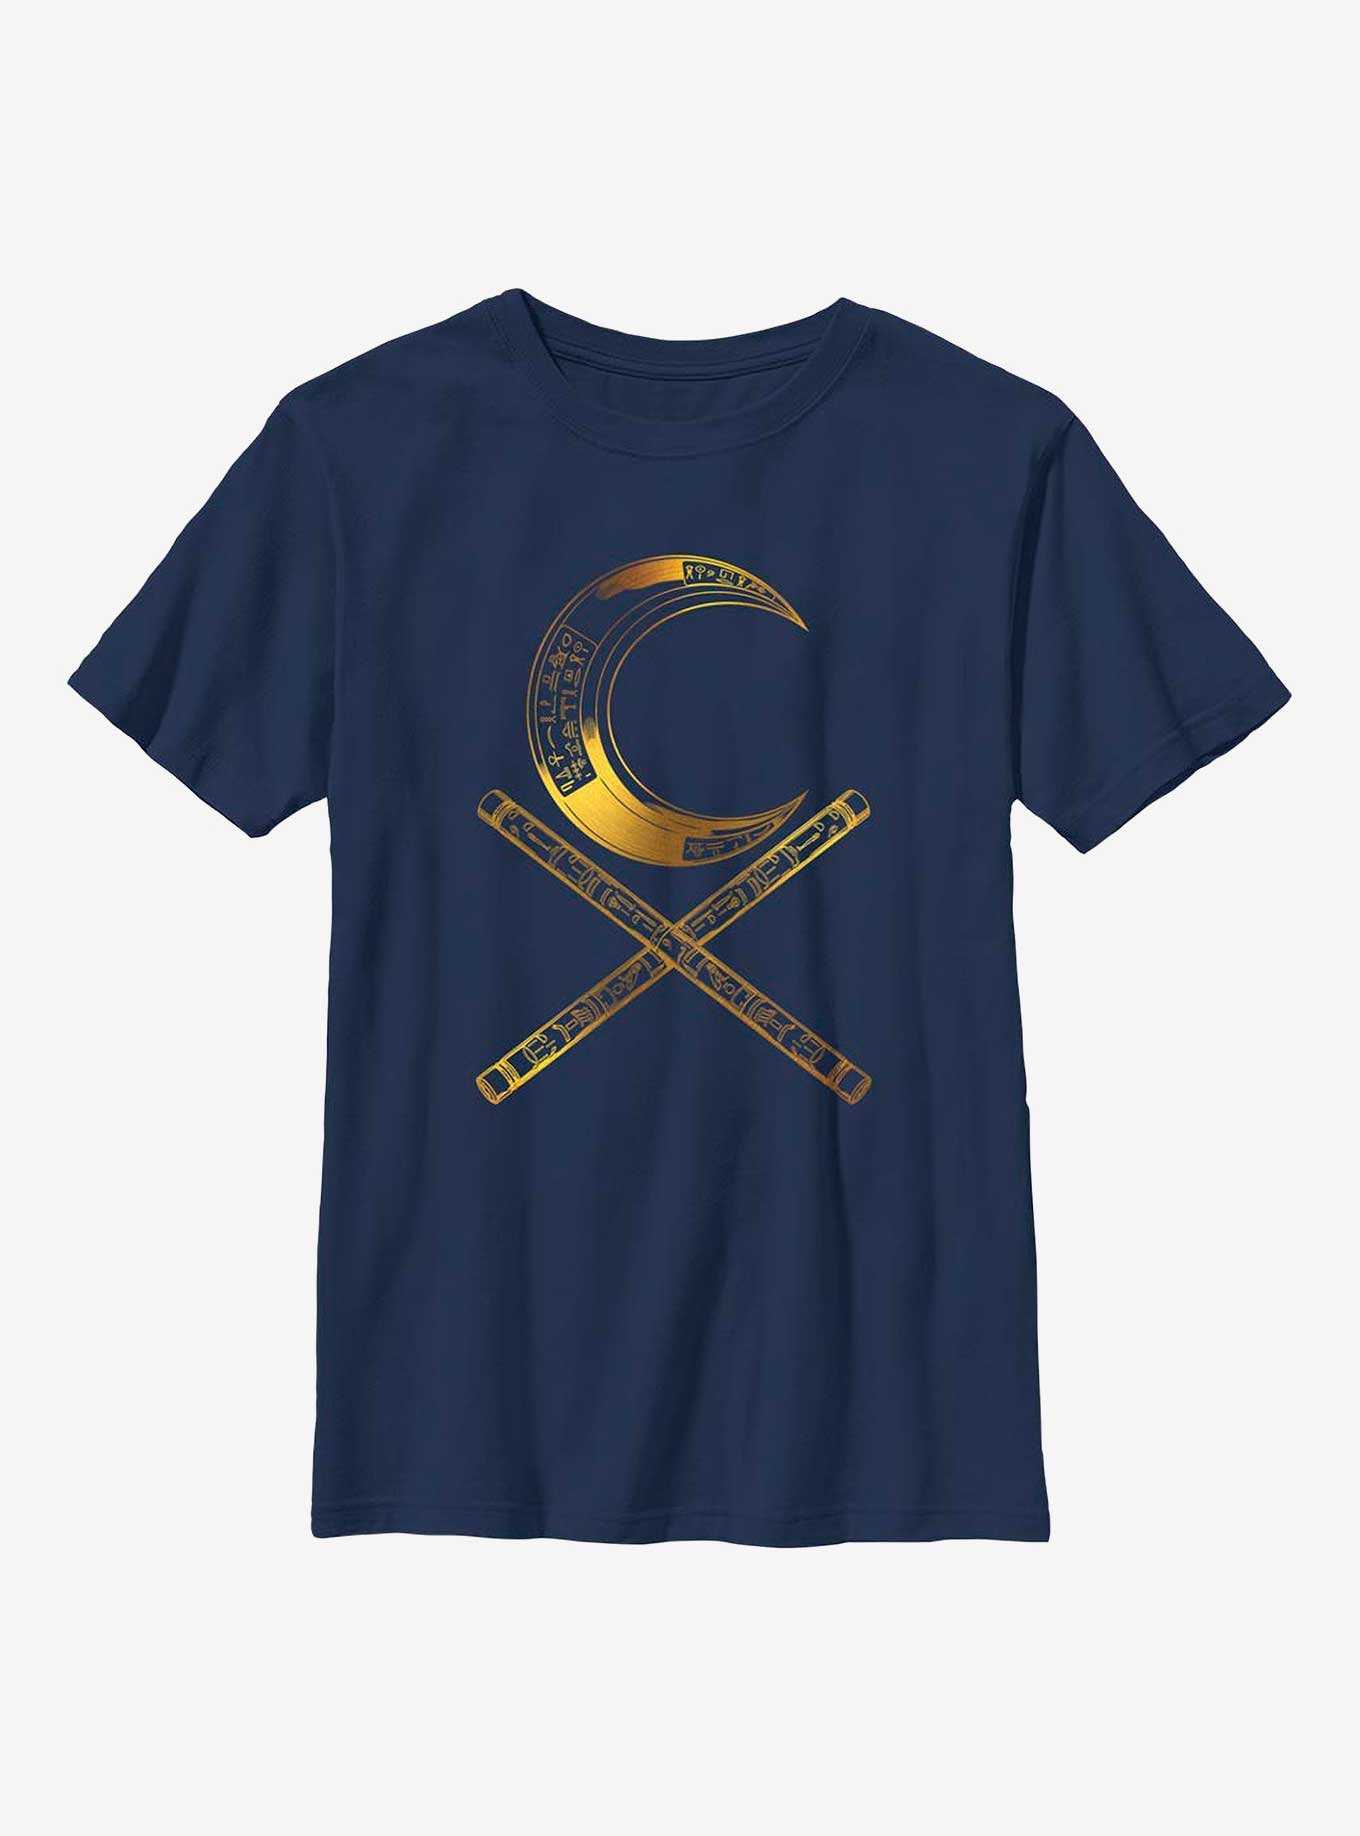 Marvel Moon Knight Moon Baton Glyphs Youth T-Shirt, , hi-res